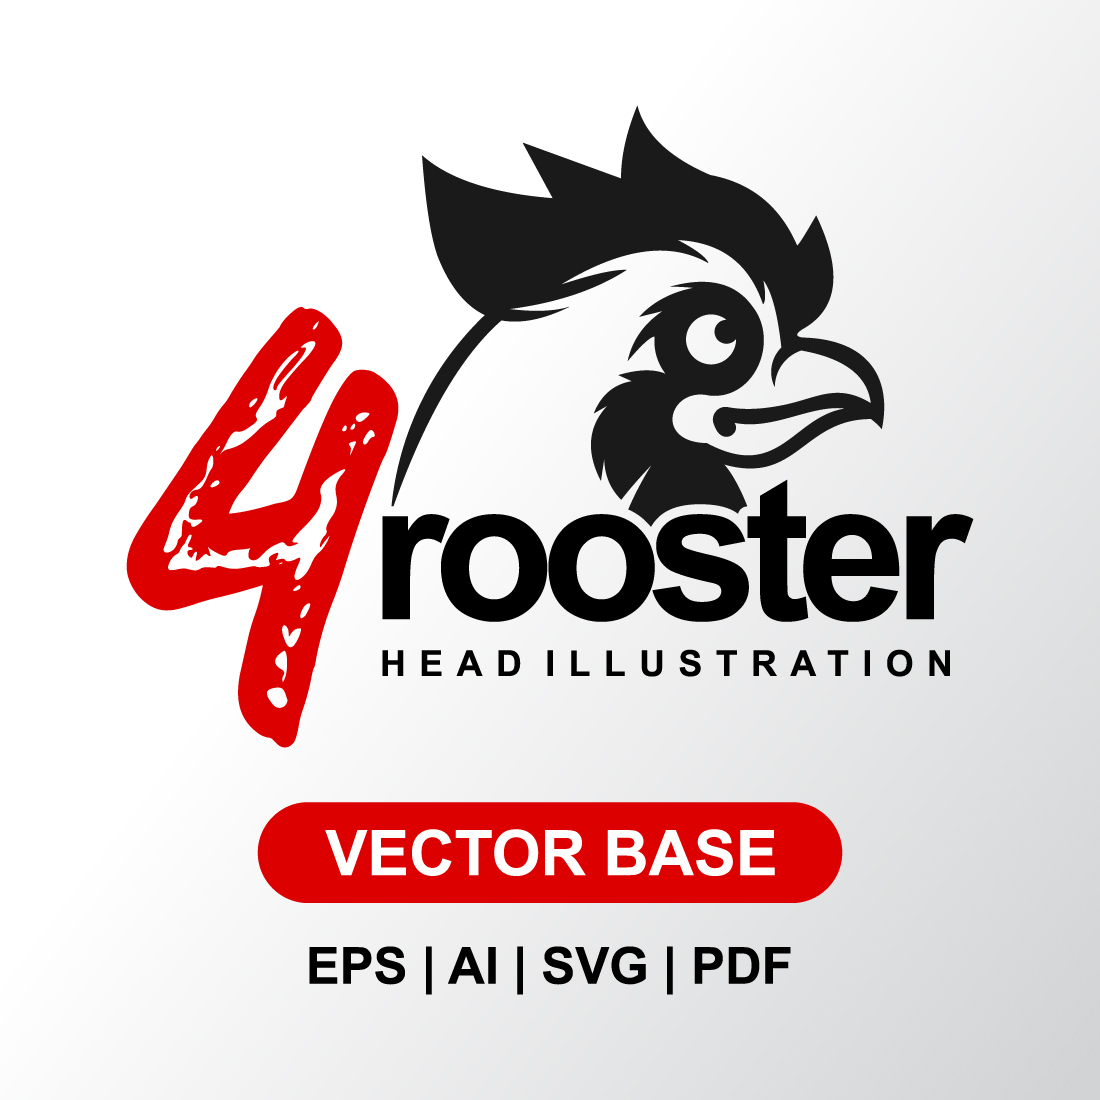 Rooster Head Illustration Design cover image.